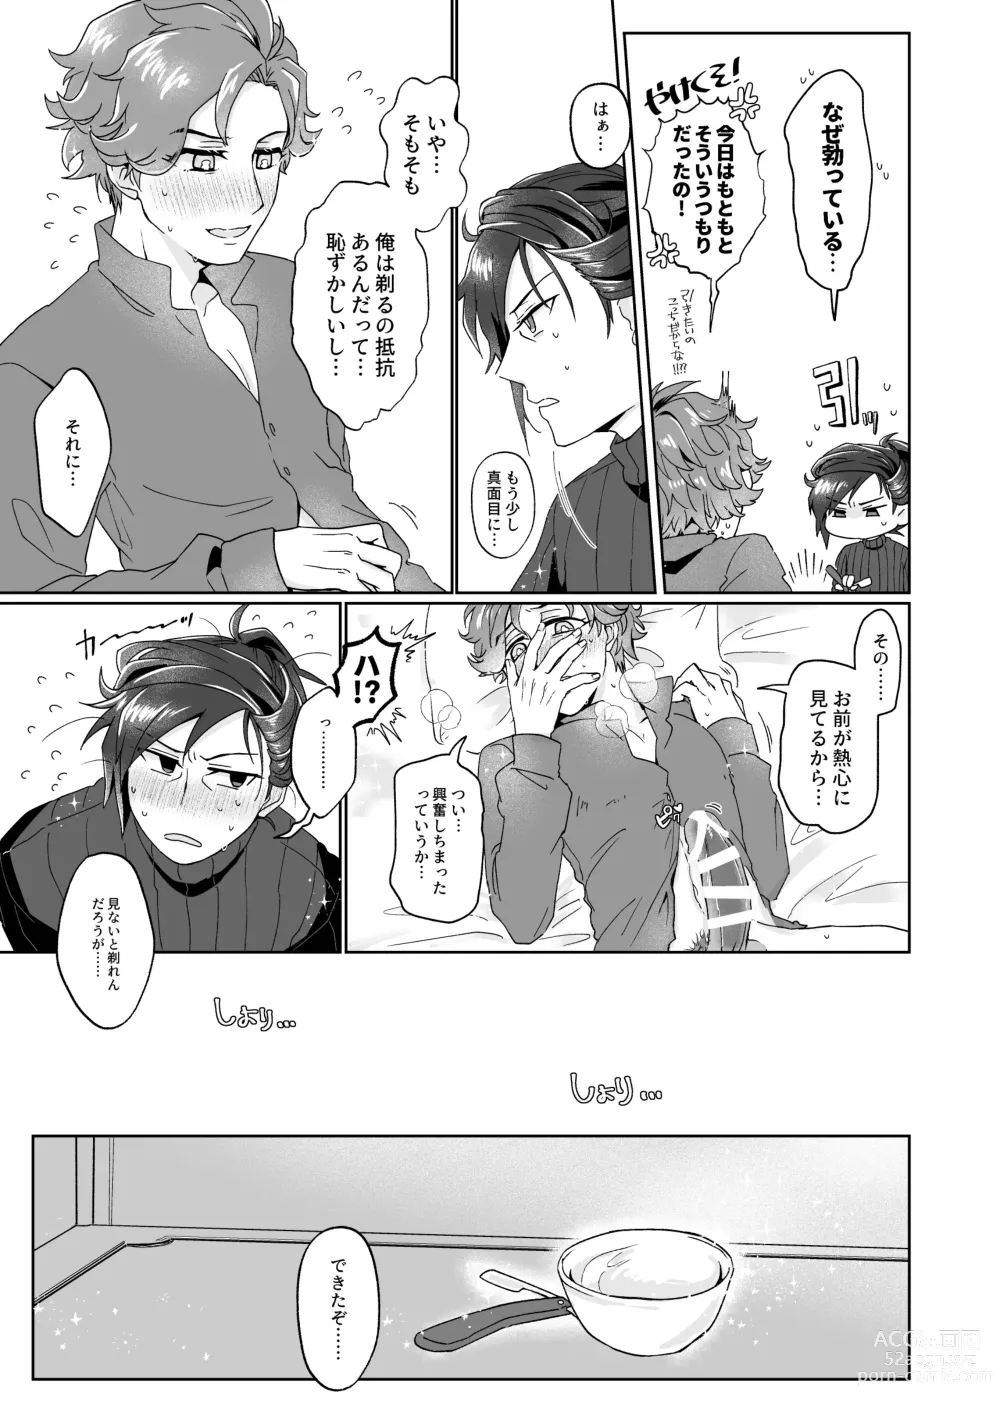 Page 11 of doujinshi Shaving Panic!